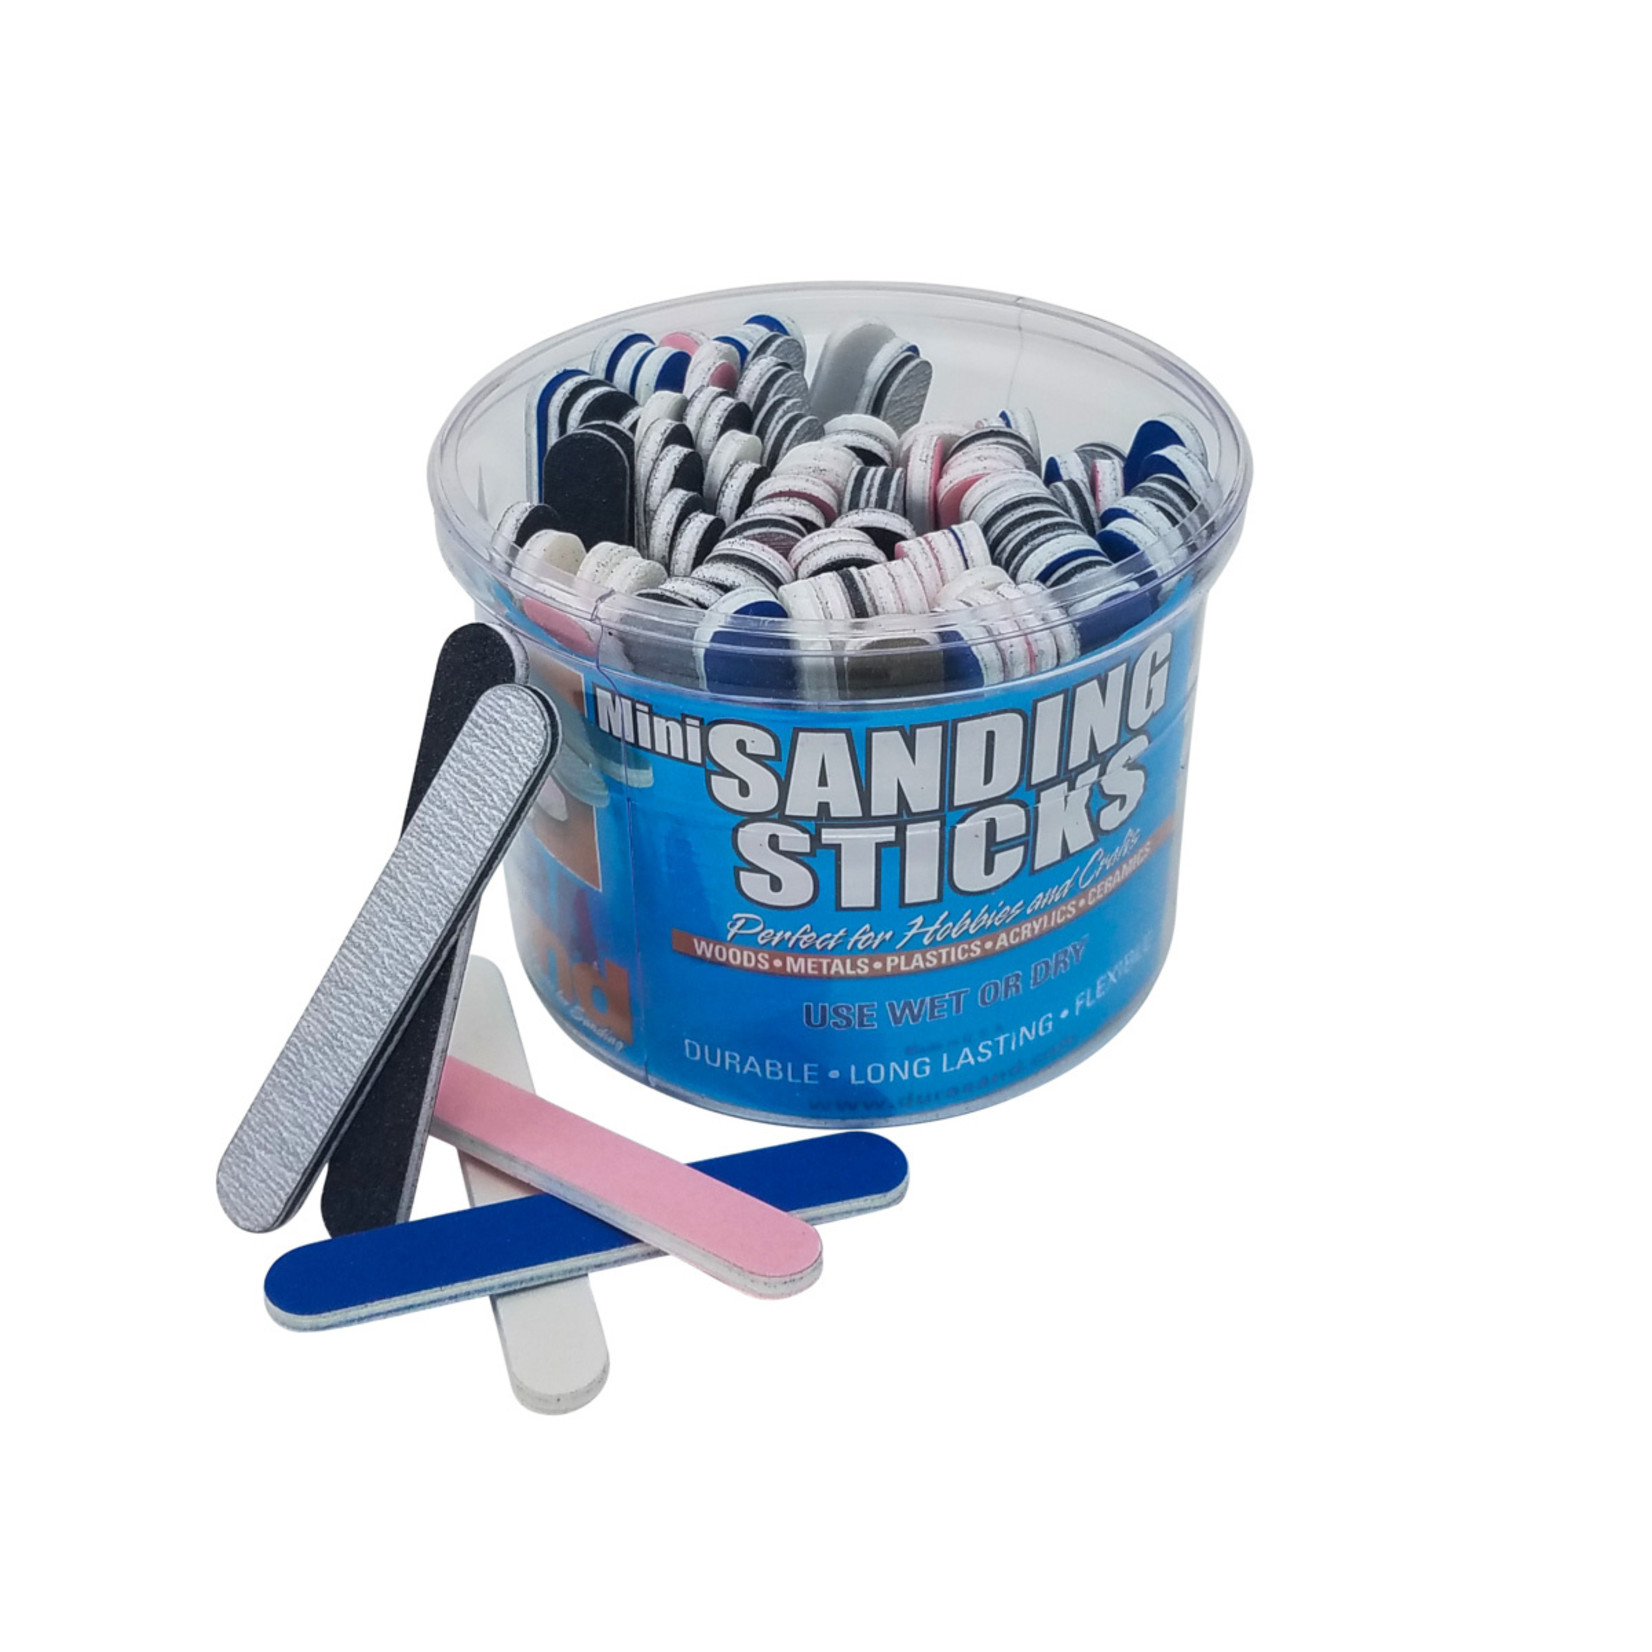 Durasand Mini Sanding Sticks, 100 Piece Bucket, Assorted Grits & - Extreme  R/C Hobbies